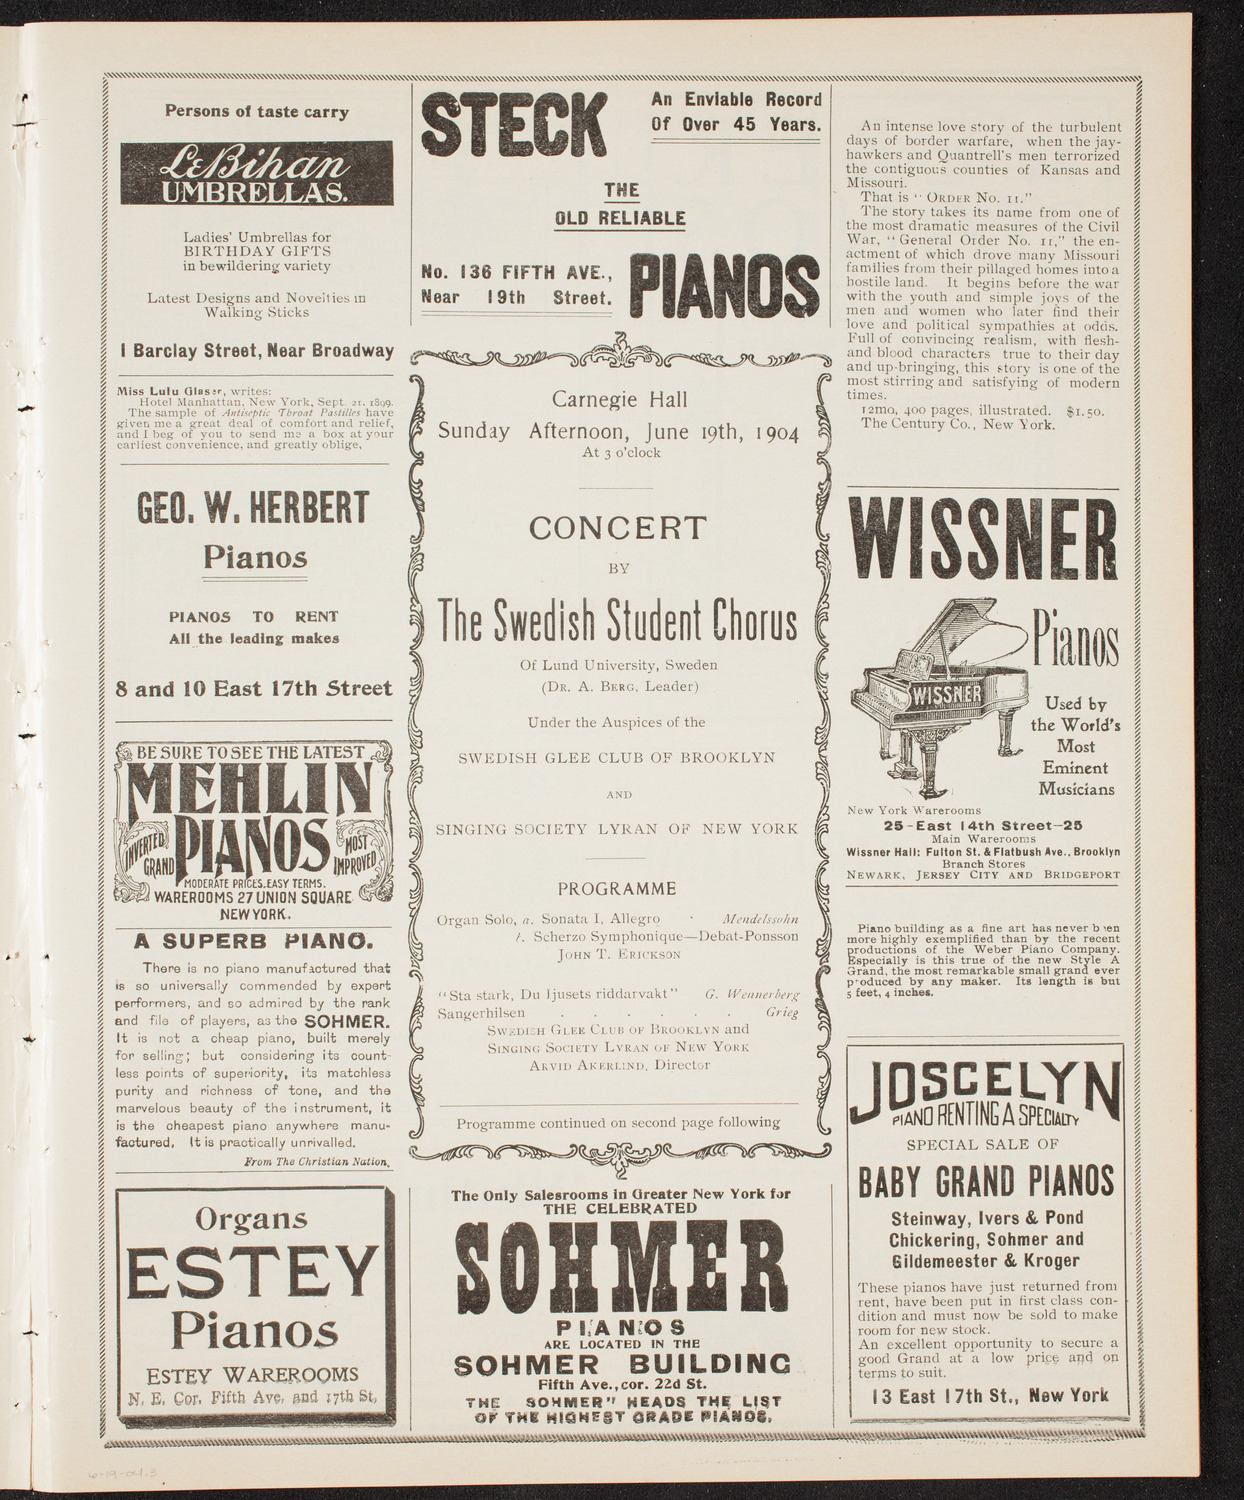 Lund University Swedish Student Chorus, June 19, 1904, program page 5